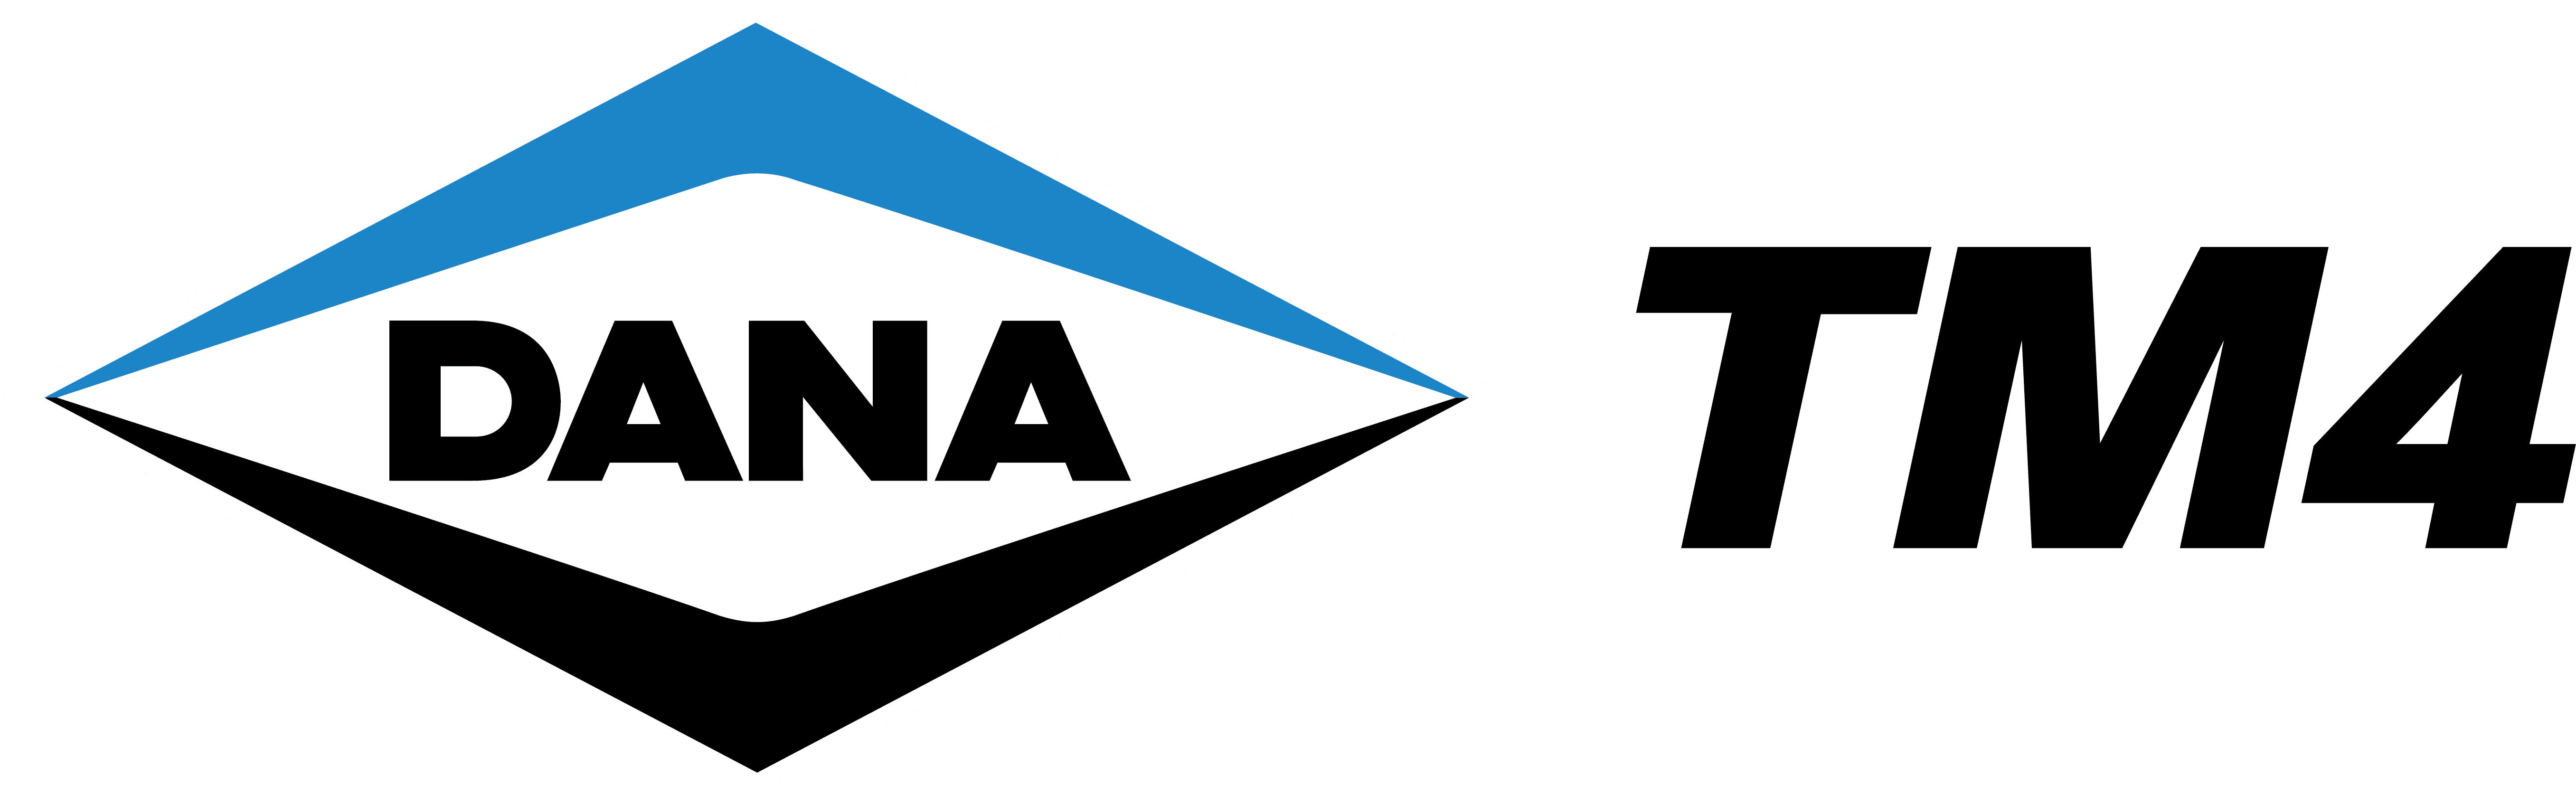 Dana TM4 Inc.